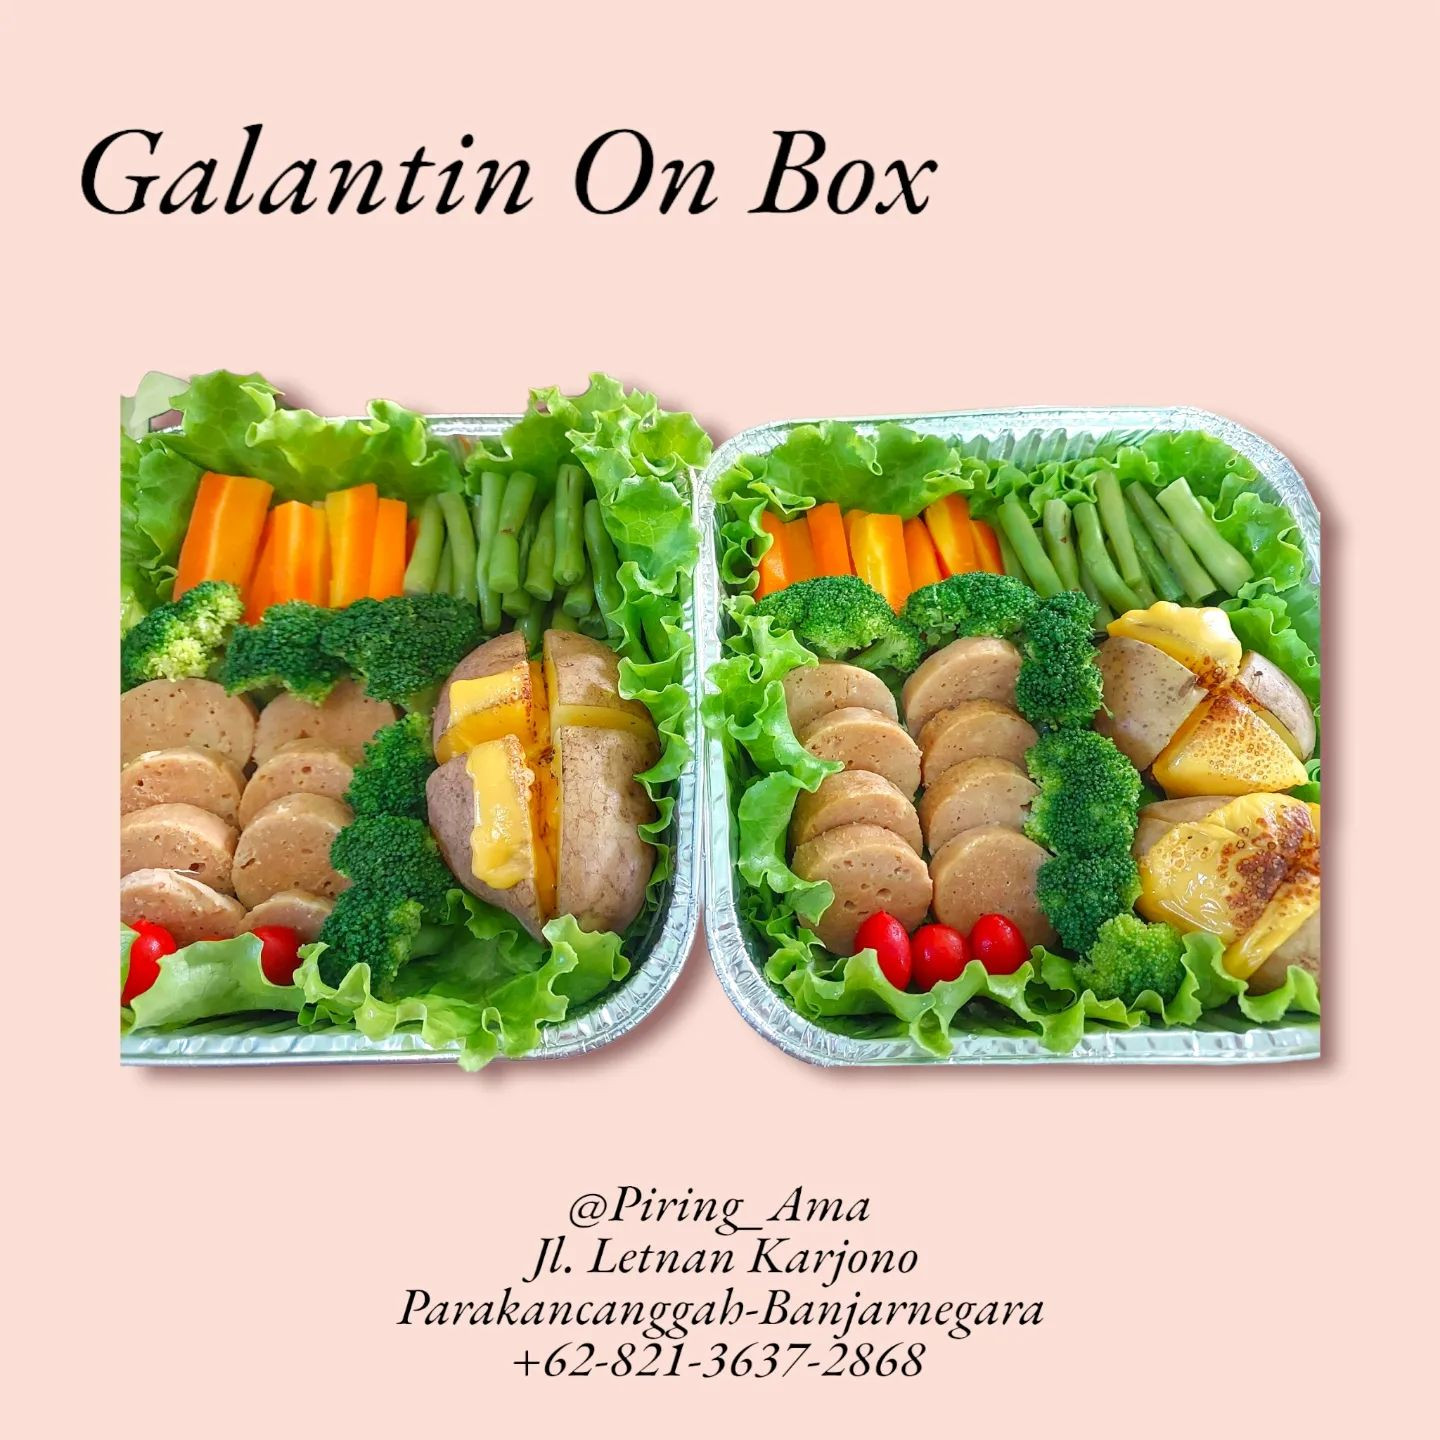 Galantin On Box